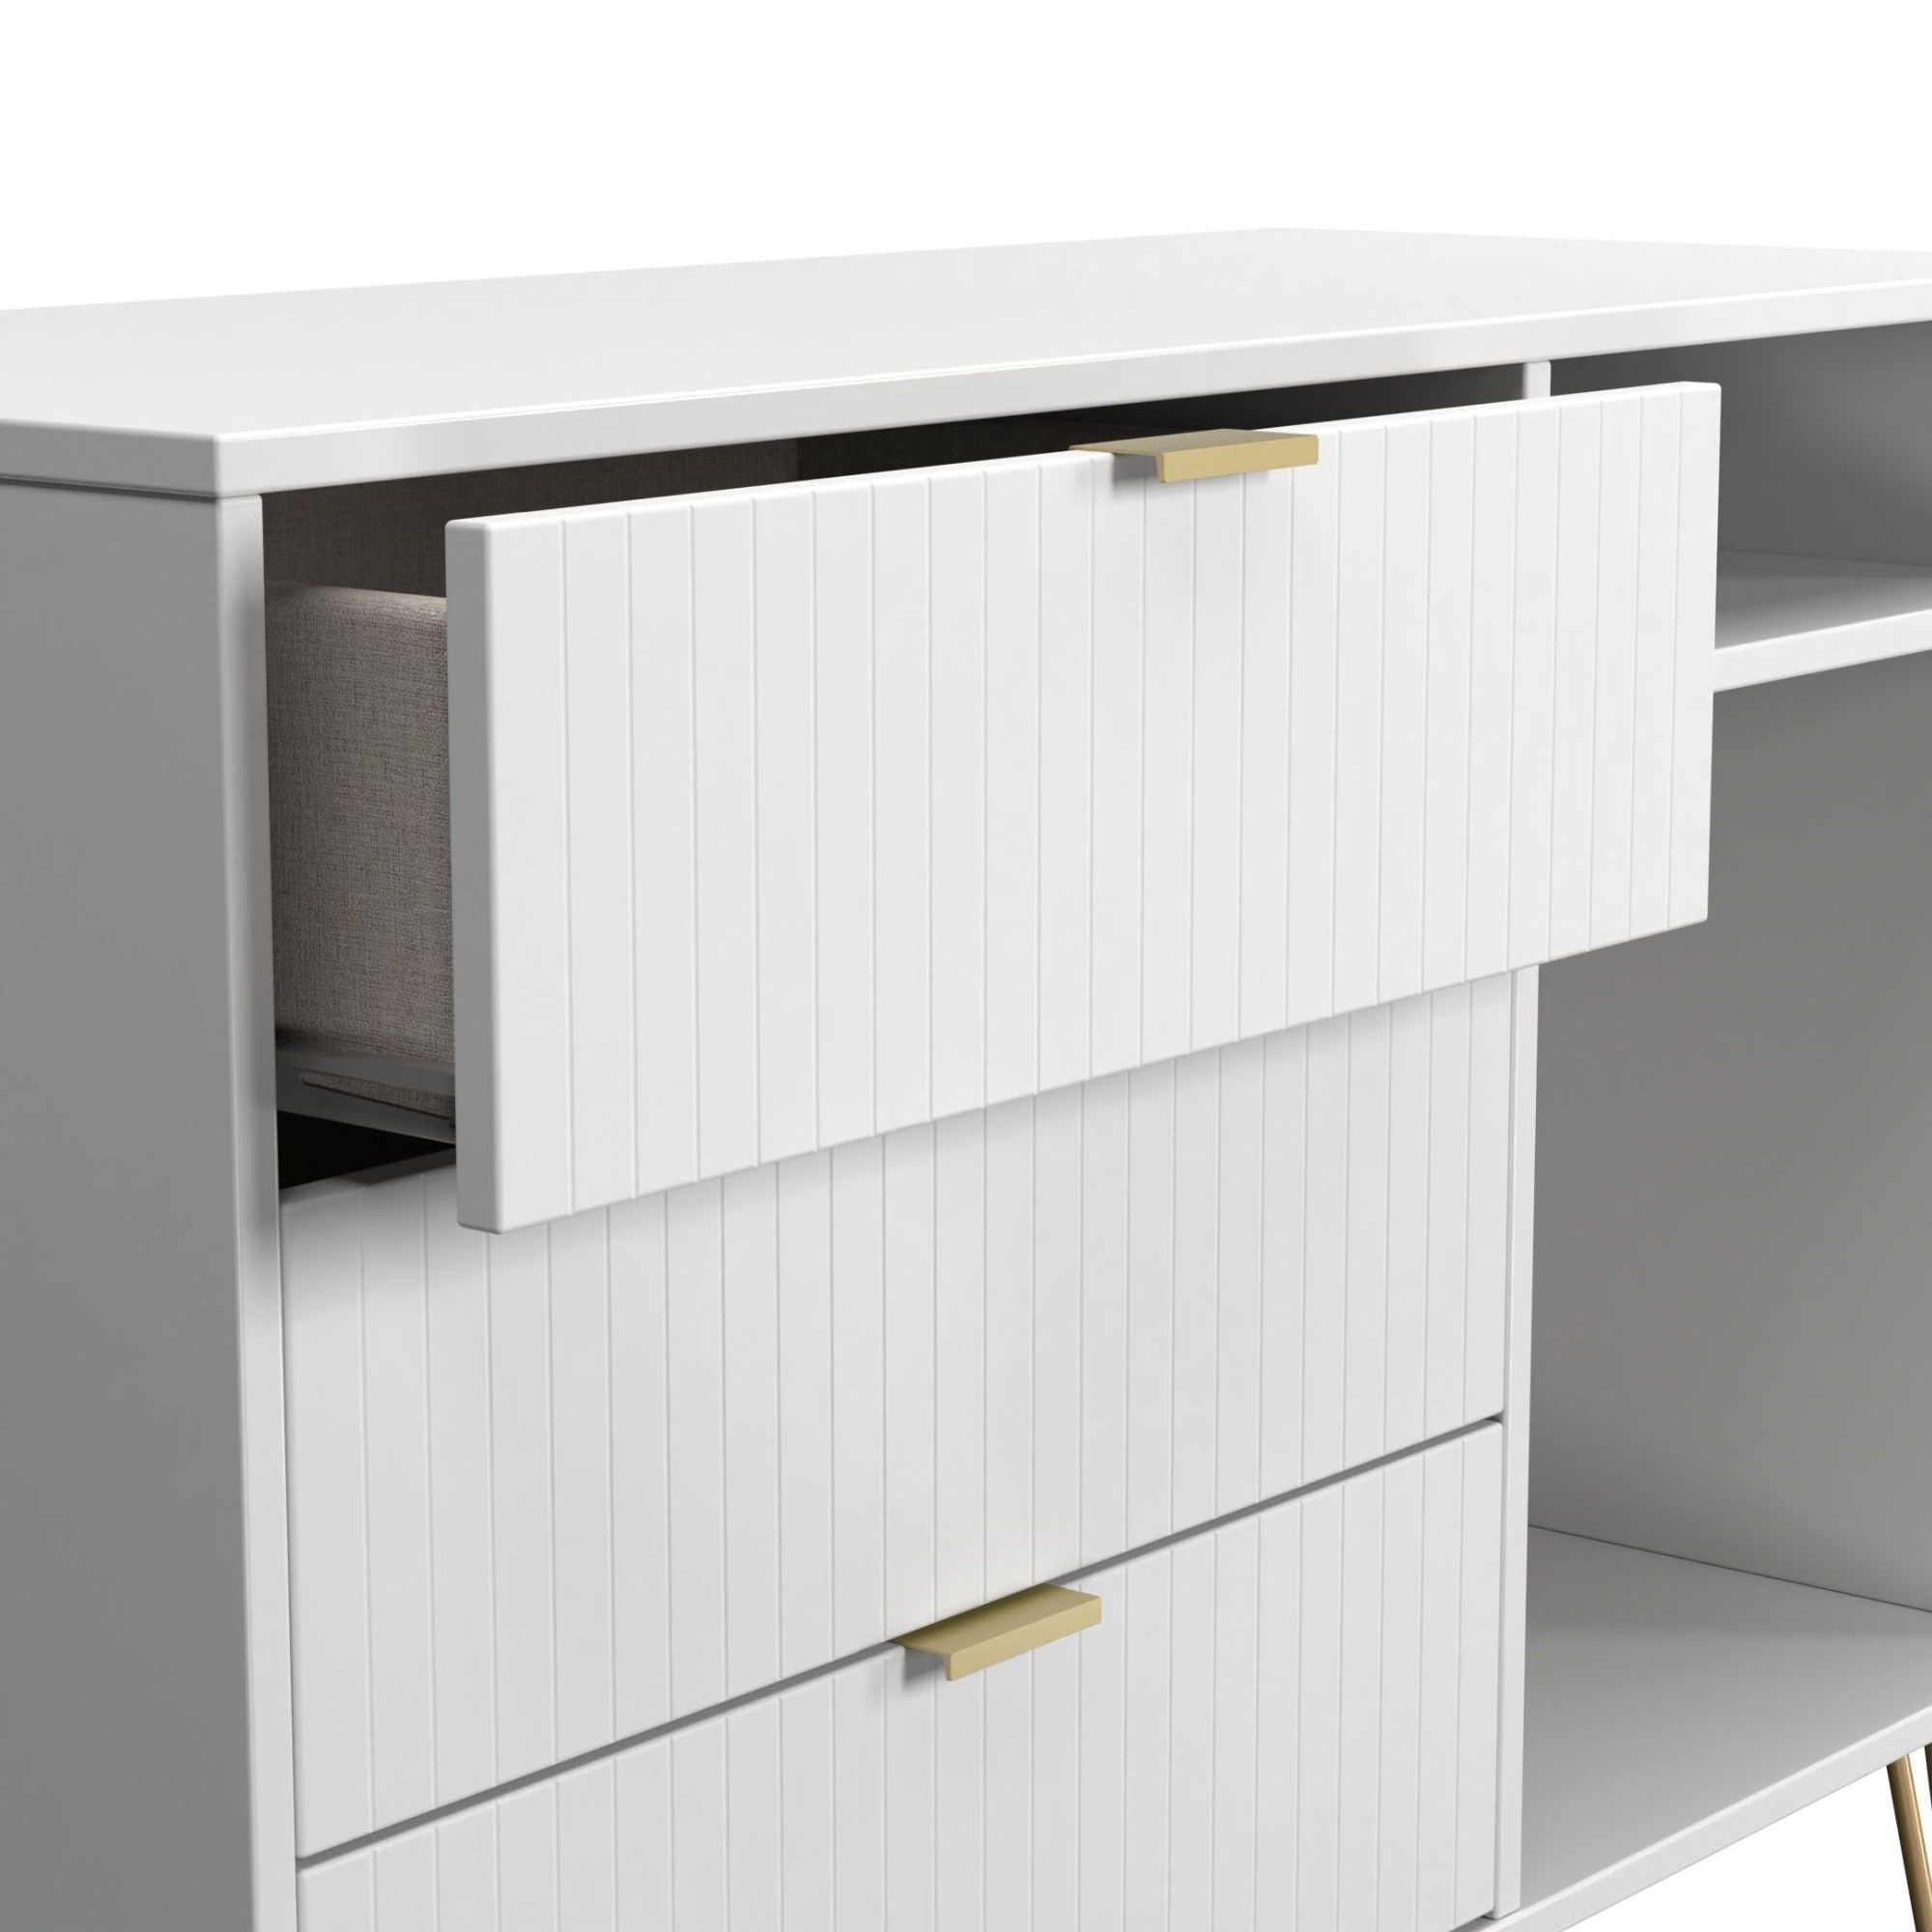 Linear Ready assembled Matt white Media unit with 2 shelves & 3 drawers, (H)97cm x (W)74cm x (D)39.5cm